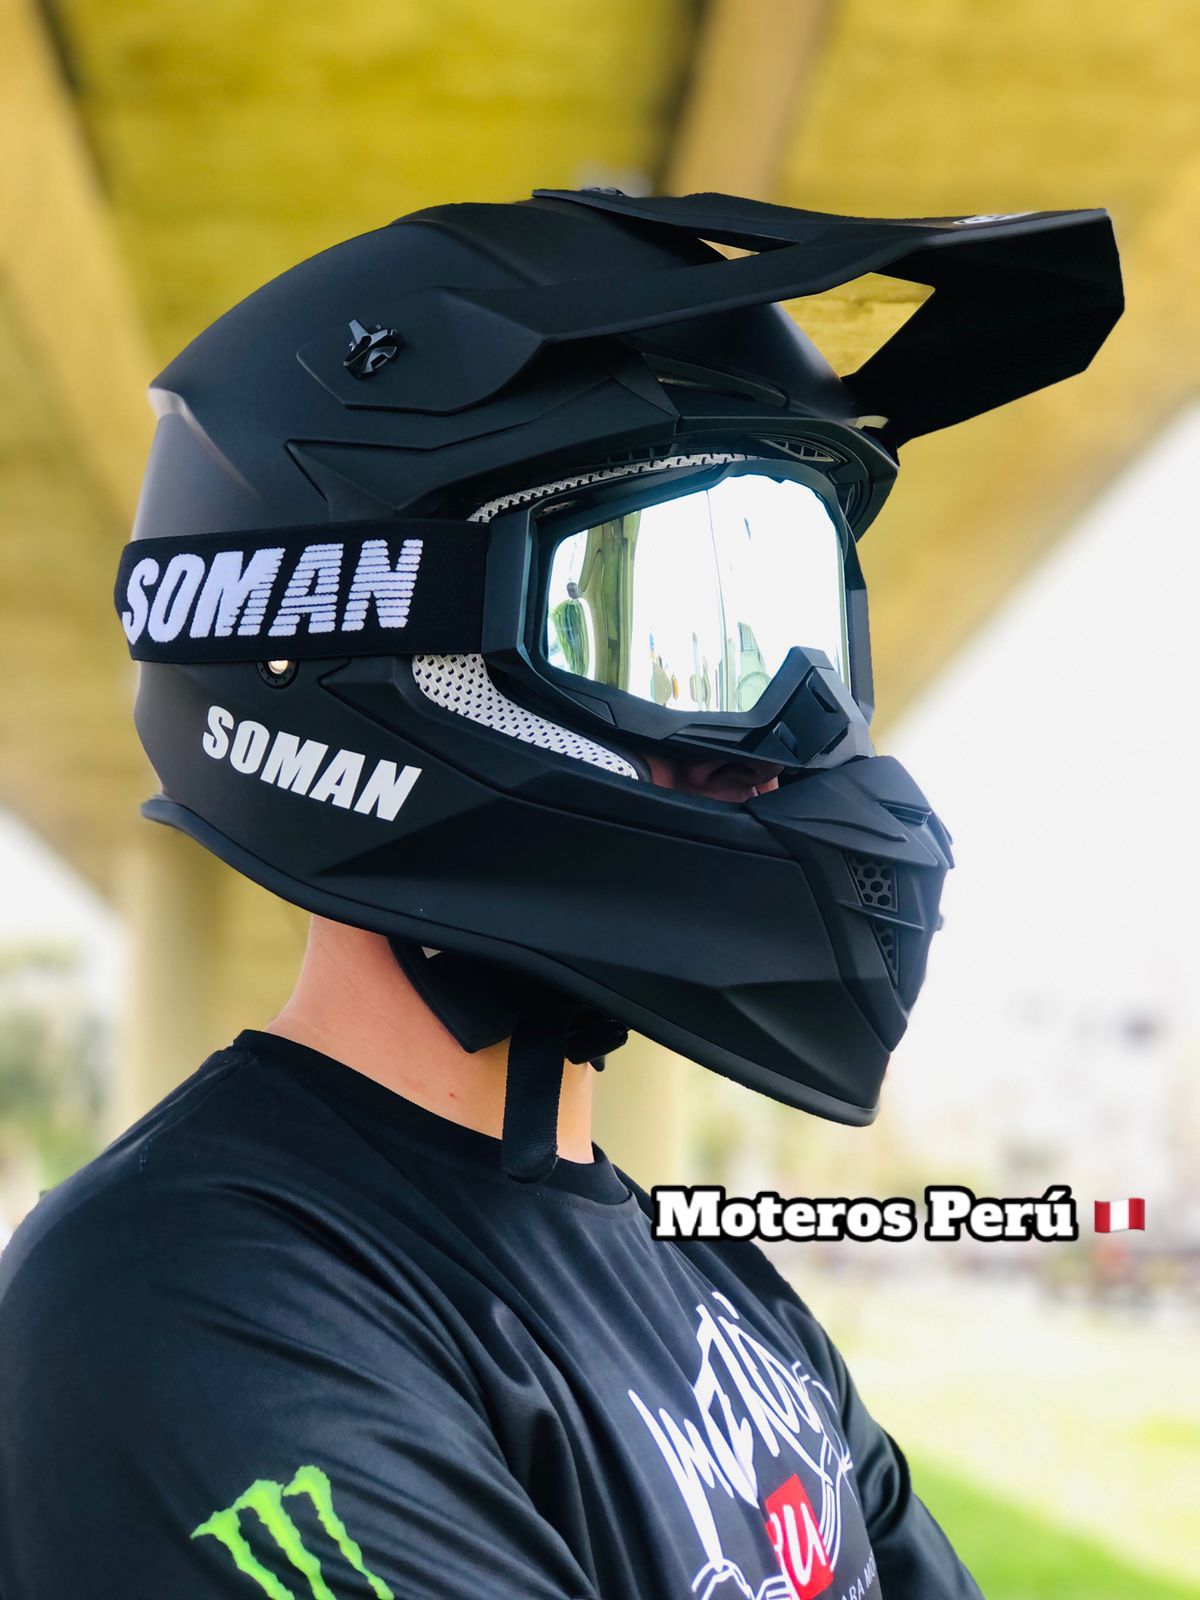 SOMAN-Casco integral de motocicleta para hombre y adulto